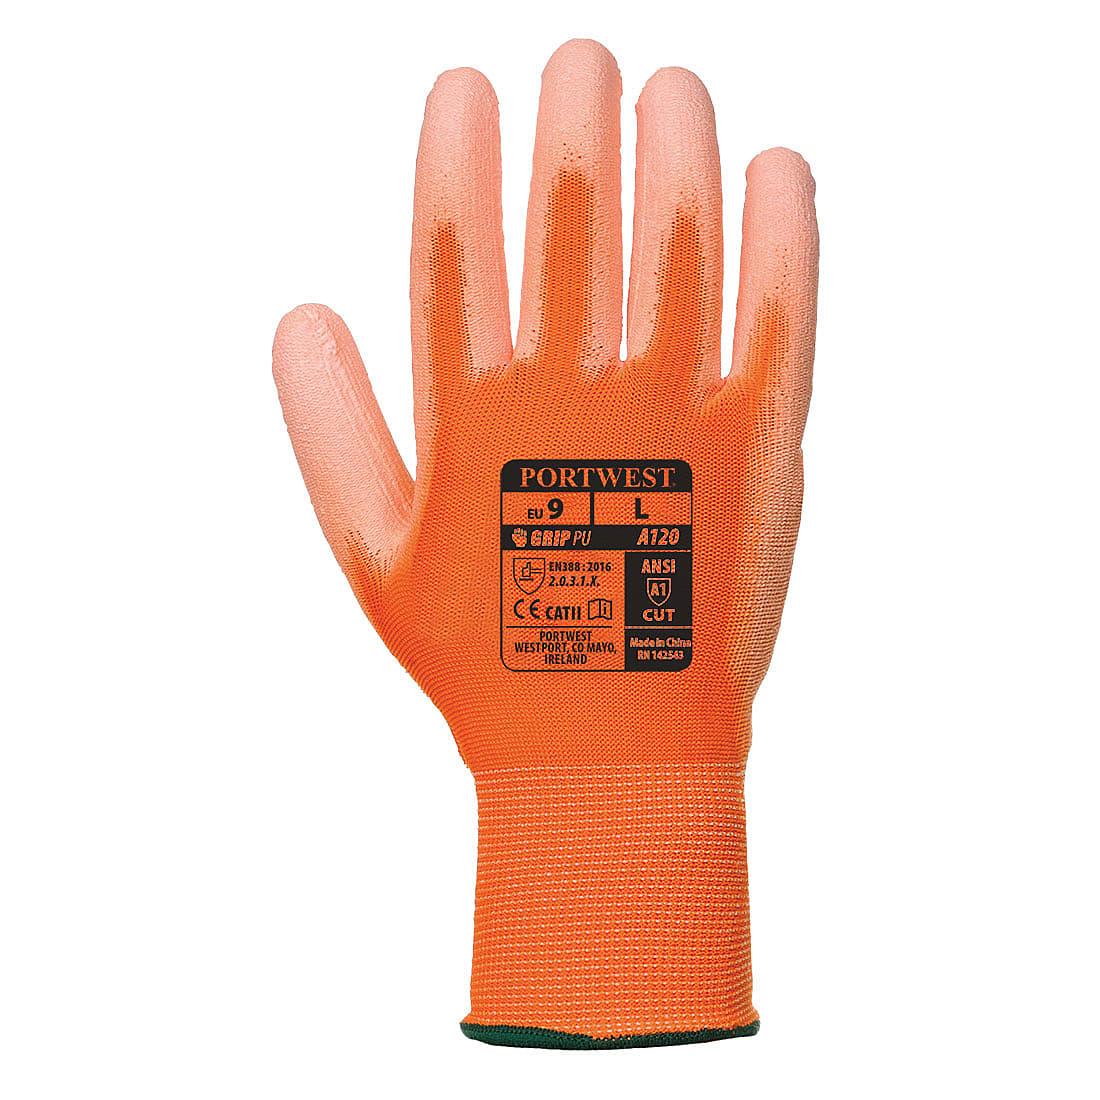 Portwest PU Palm Gloves in Orange (Product Code: A120)